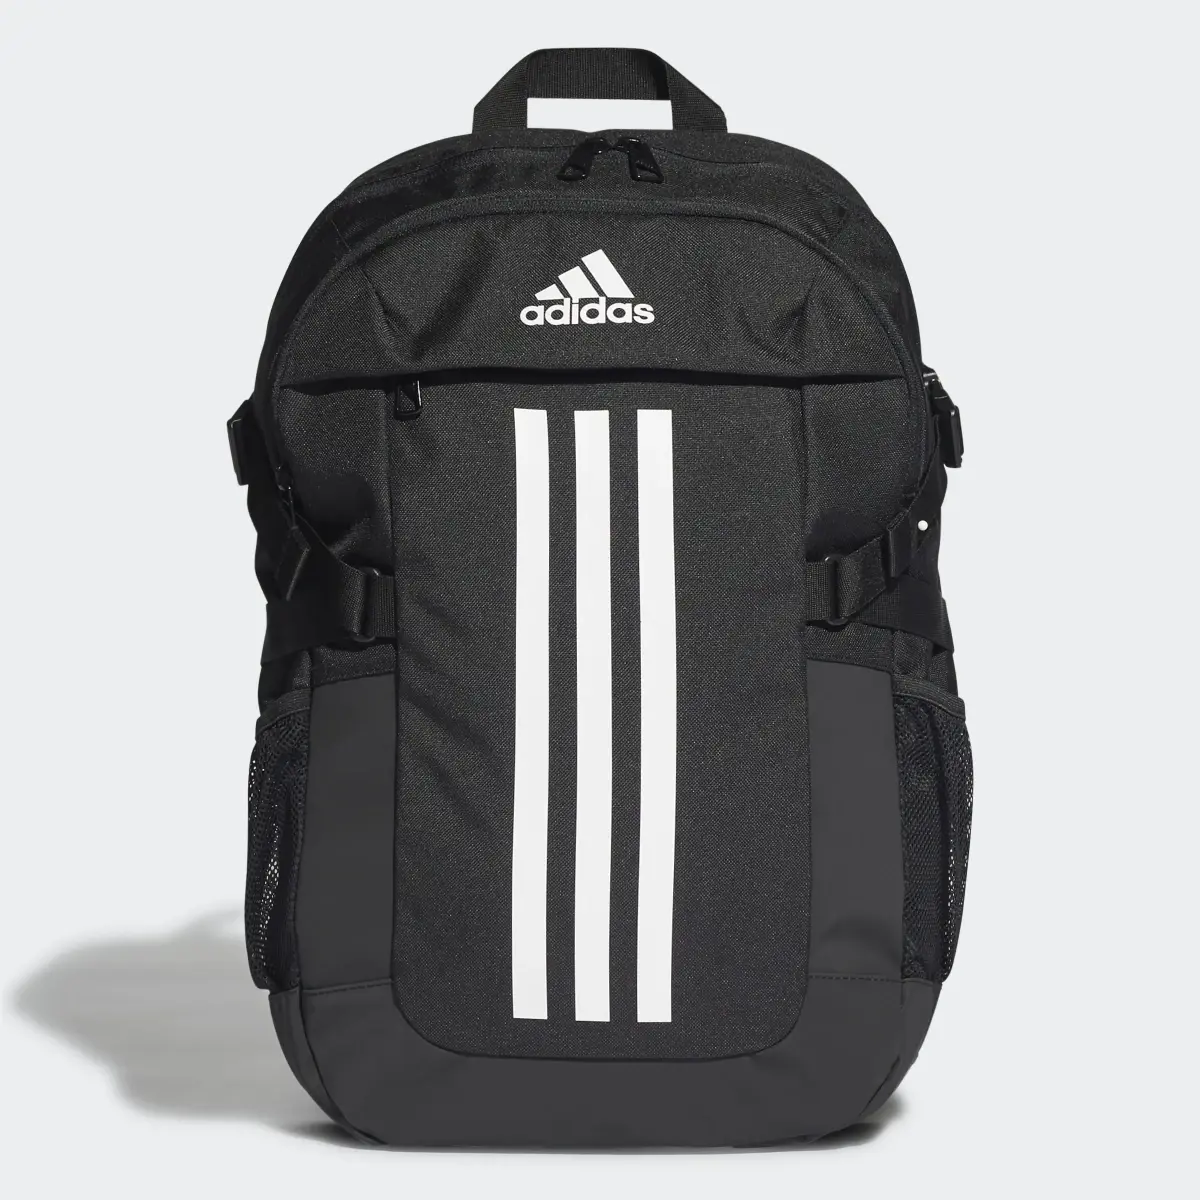 Adidas Power VI Backpack. 1